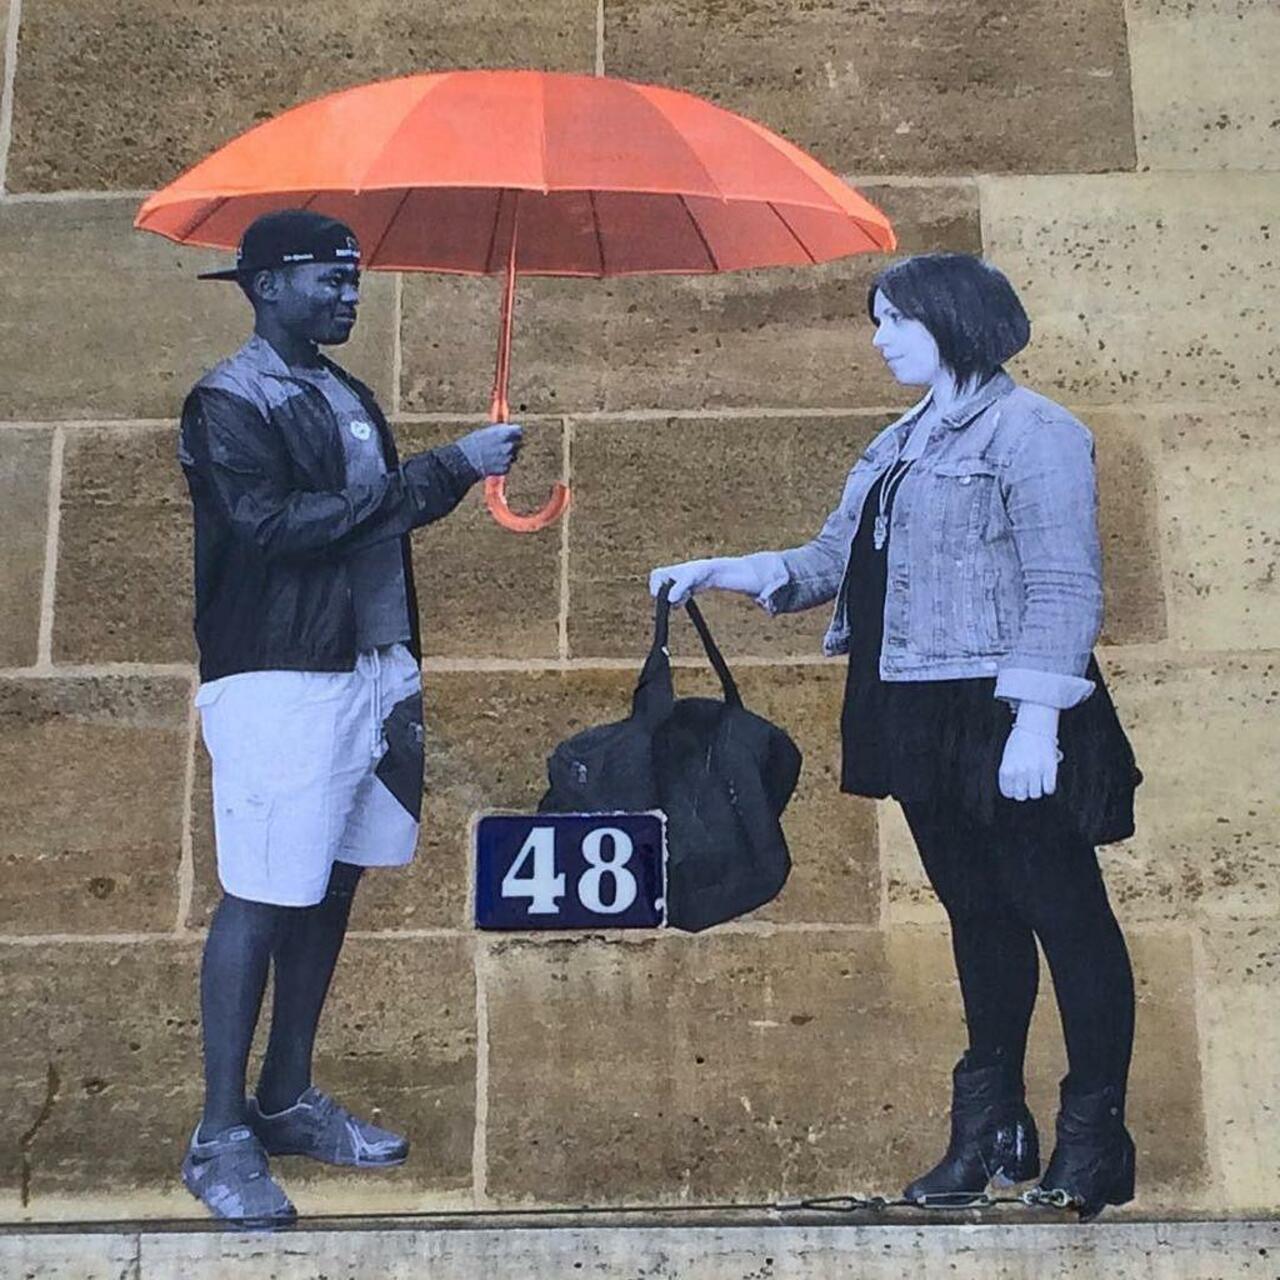 RT @StArtEverywhere: Under my umbrella #streetphotography #parisstreetart #graffitart #graffiti #streetart #collage #stencils #welovestr… http://t.co/6WSADOazPH